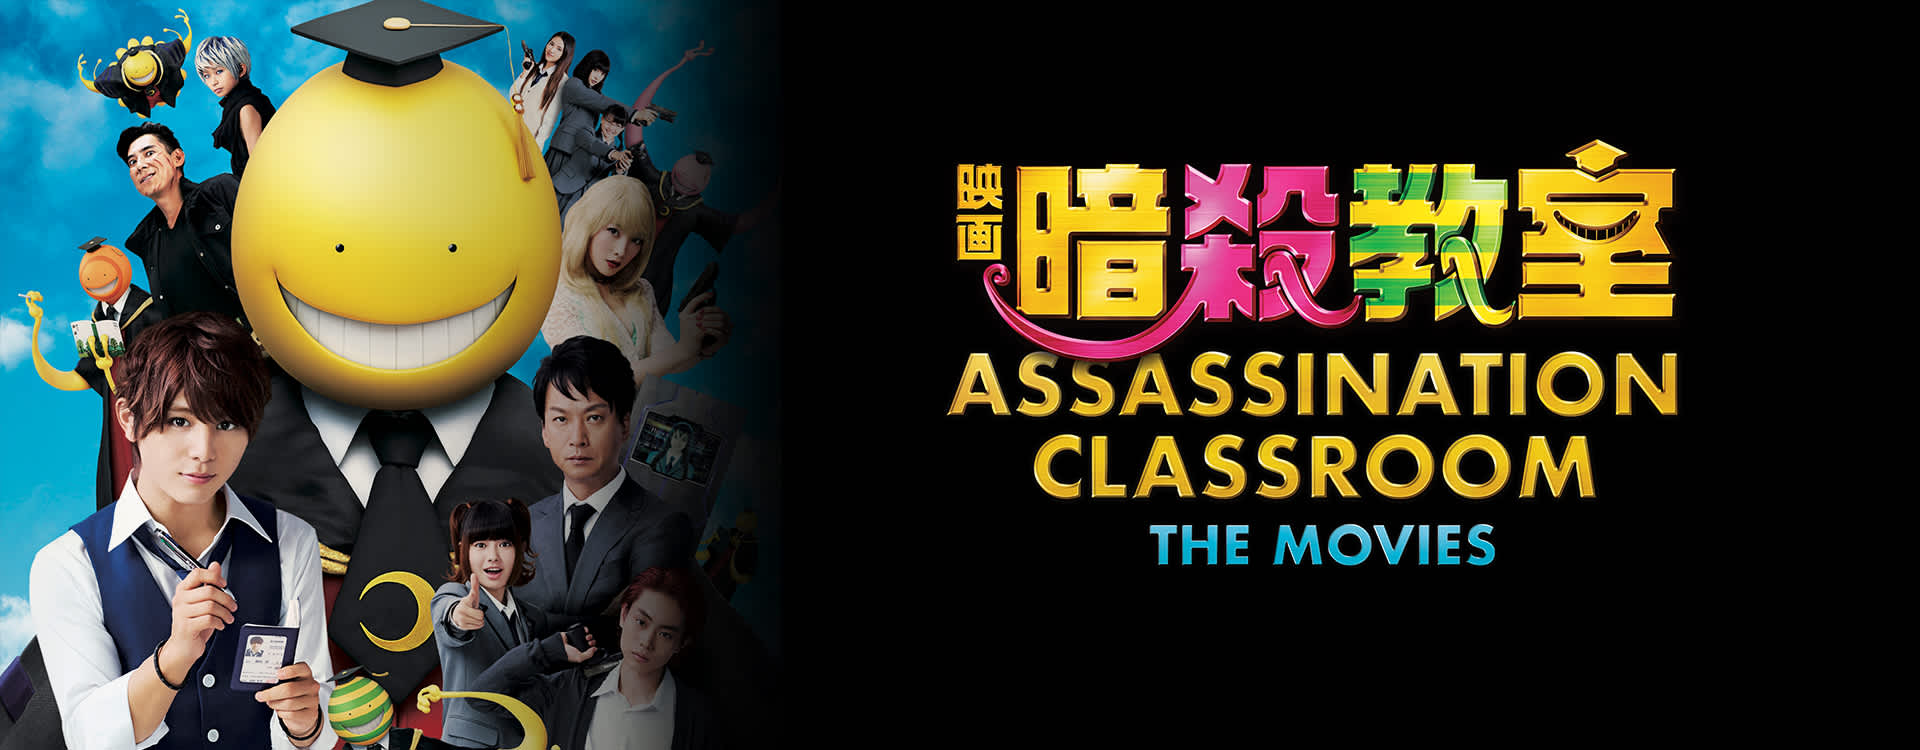 assassination classroom live action sub